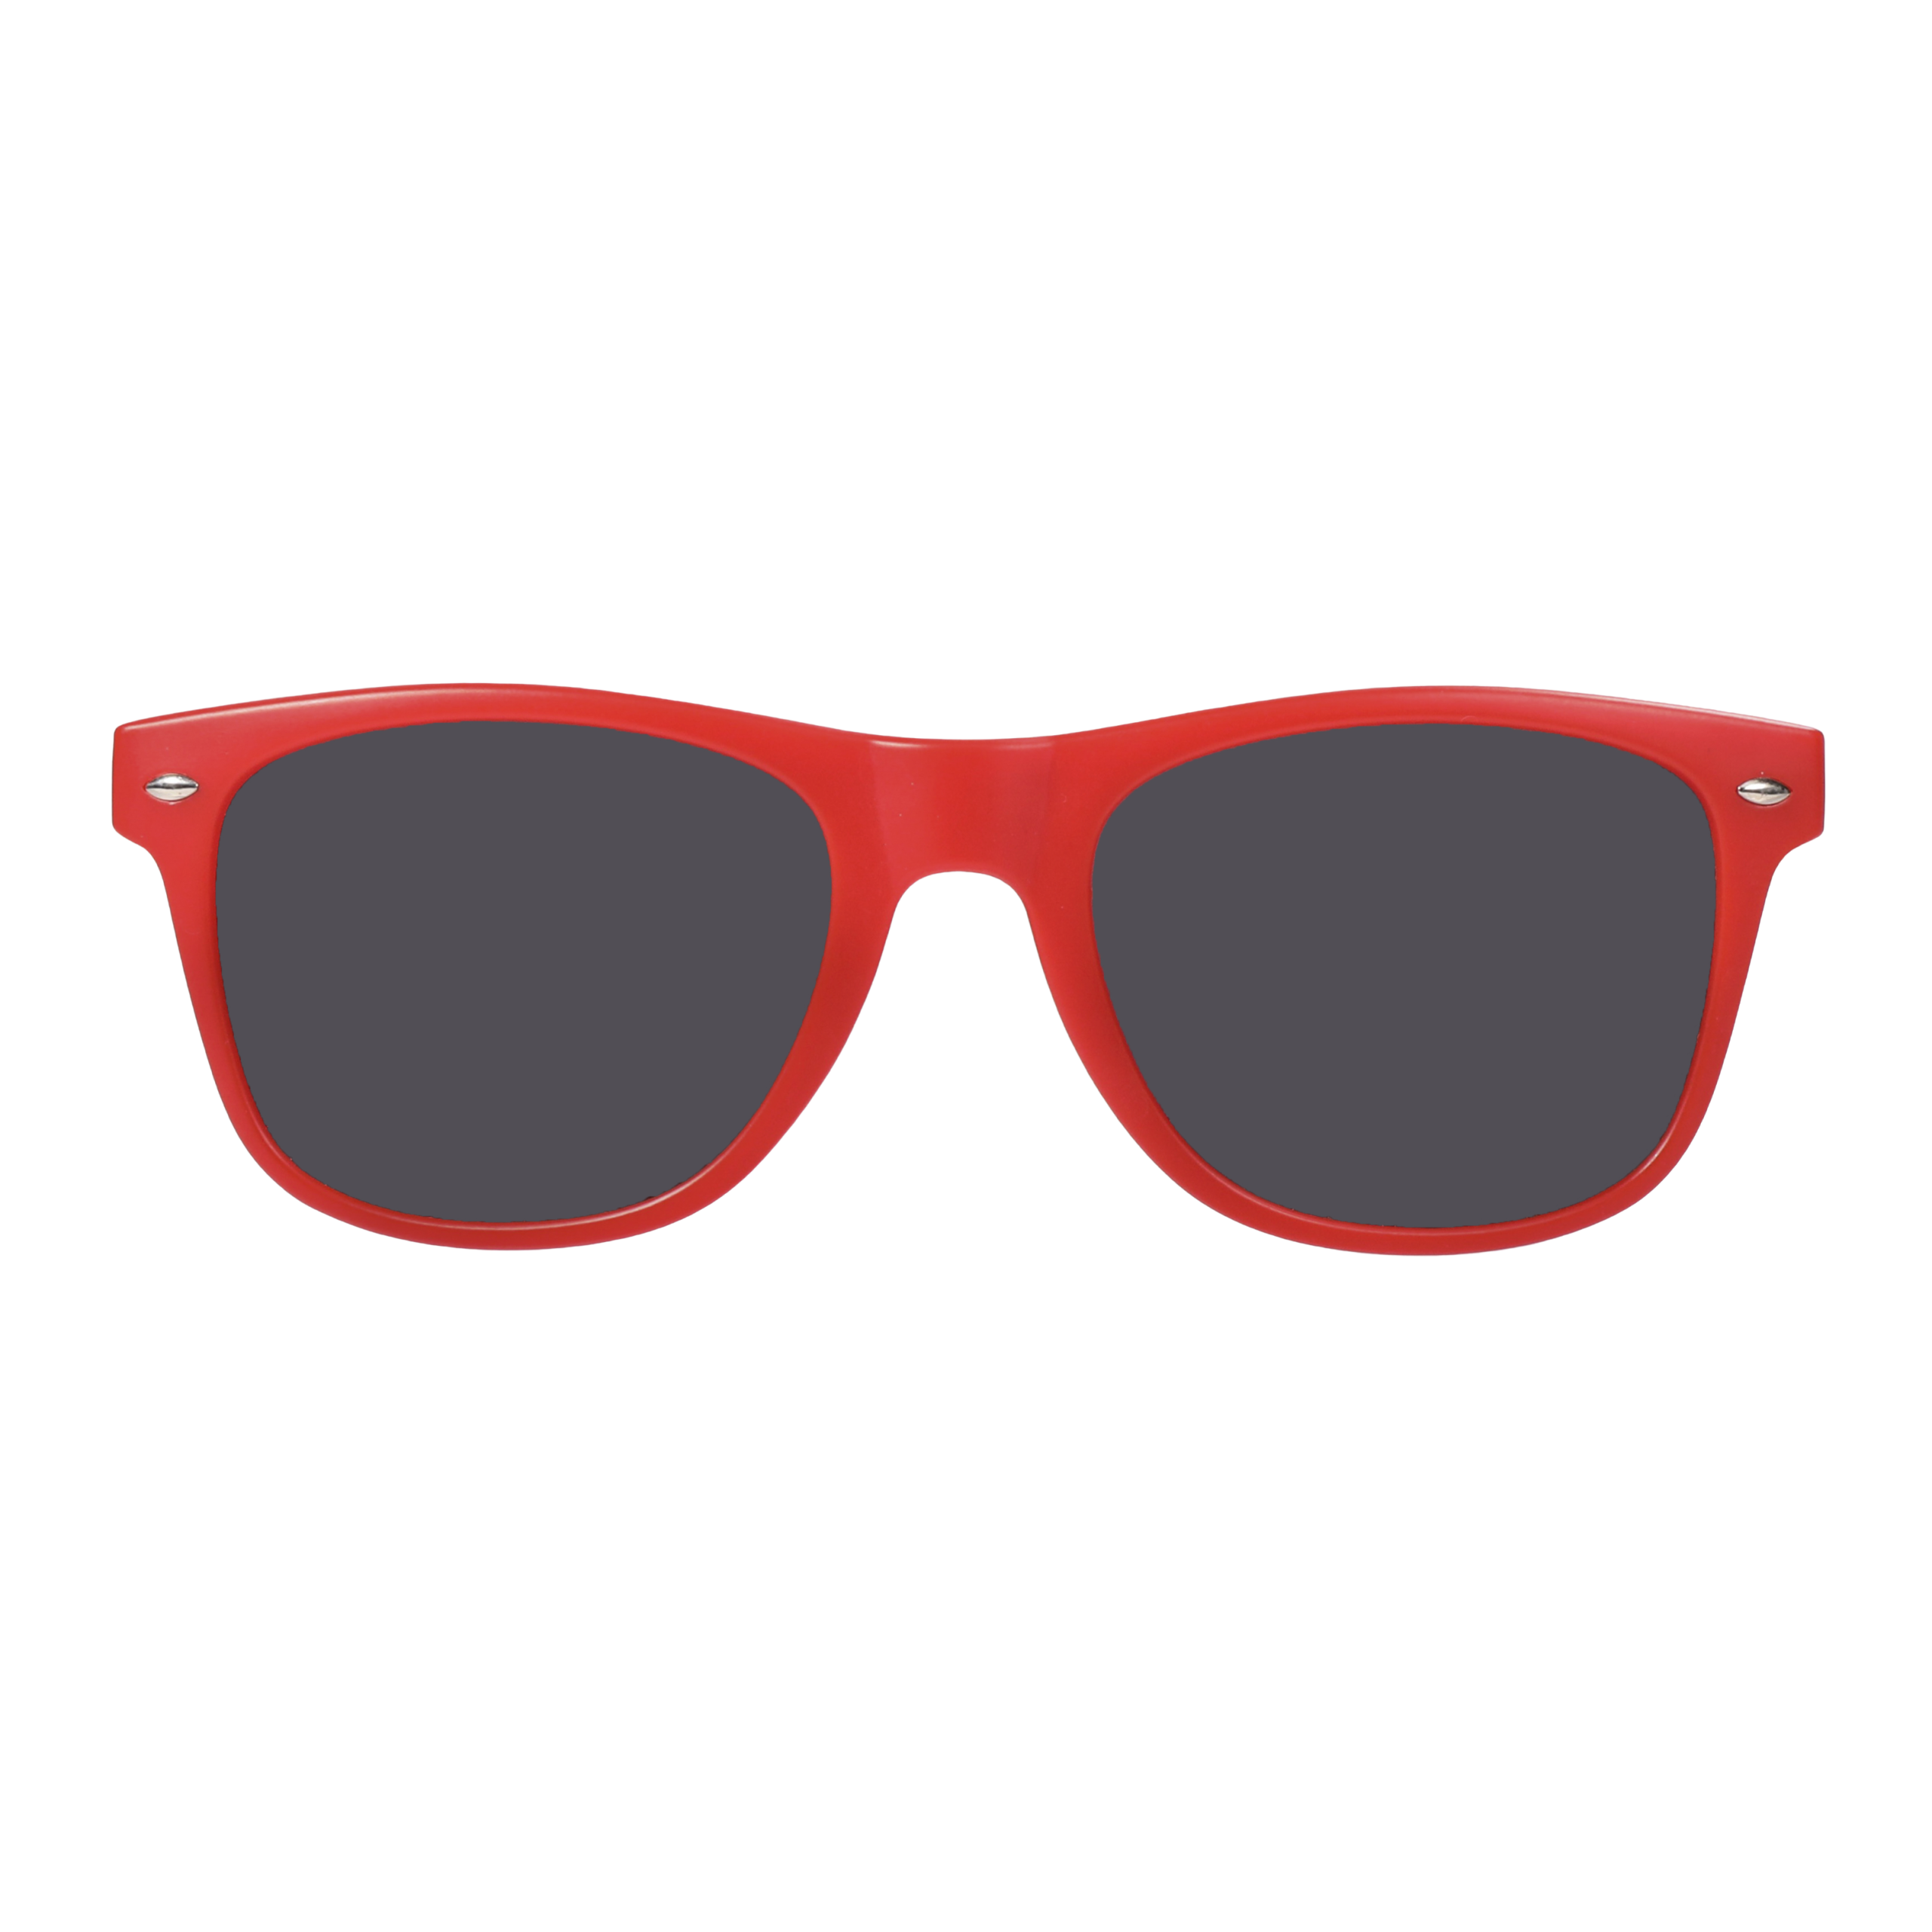 Bamboo Sunglasses - Red | Eyewear